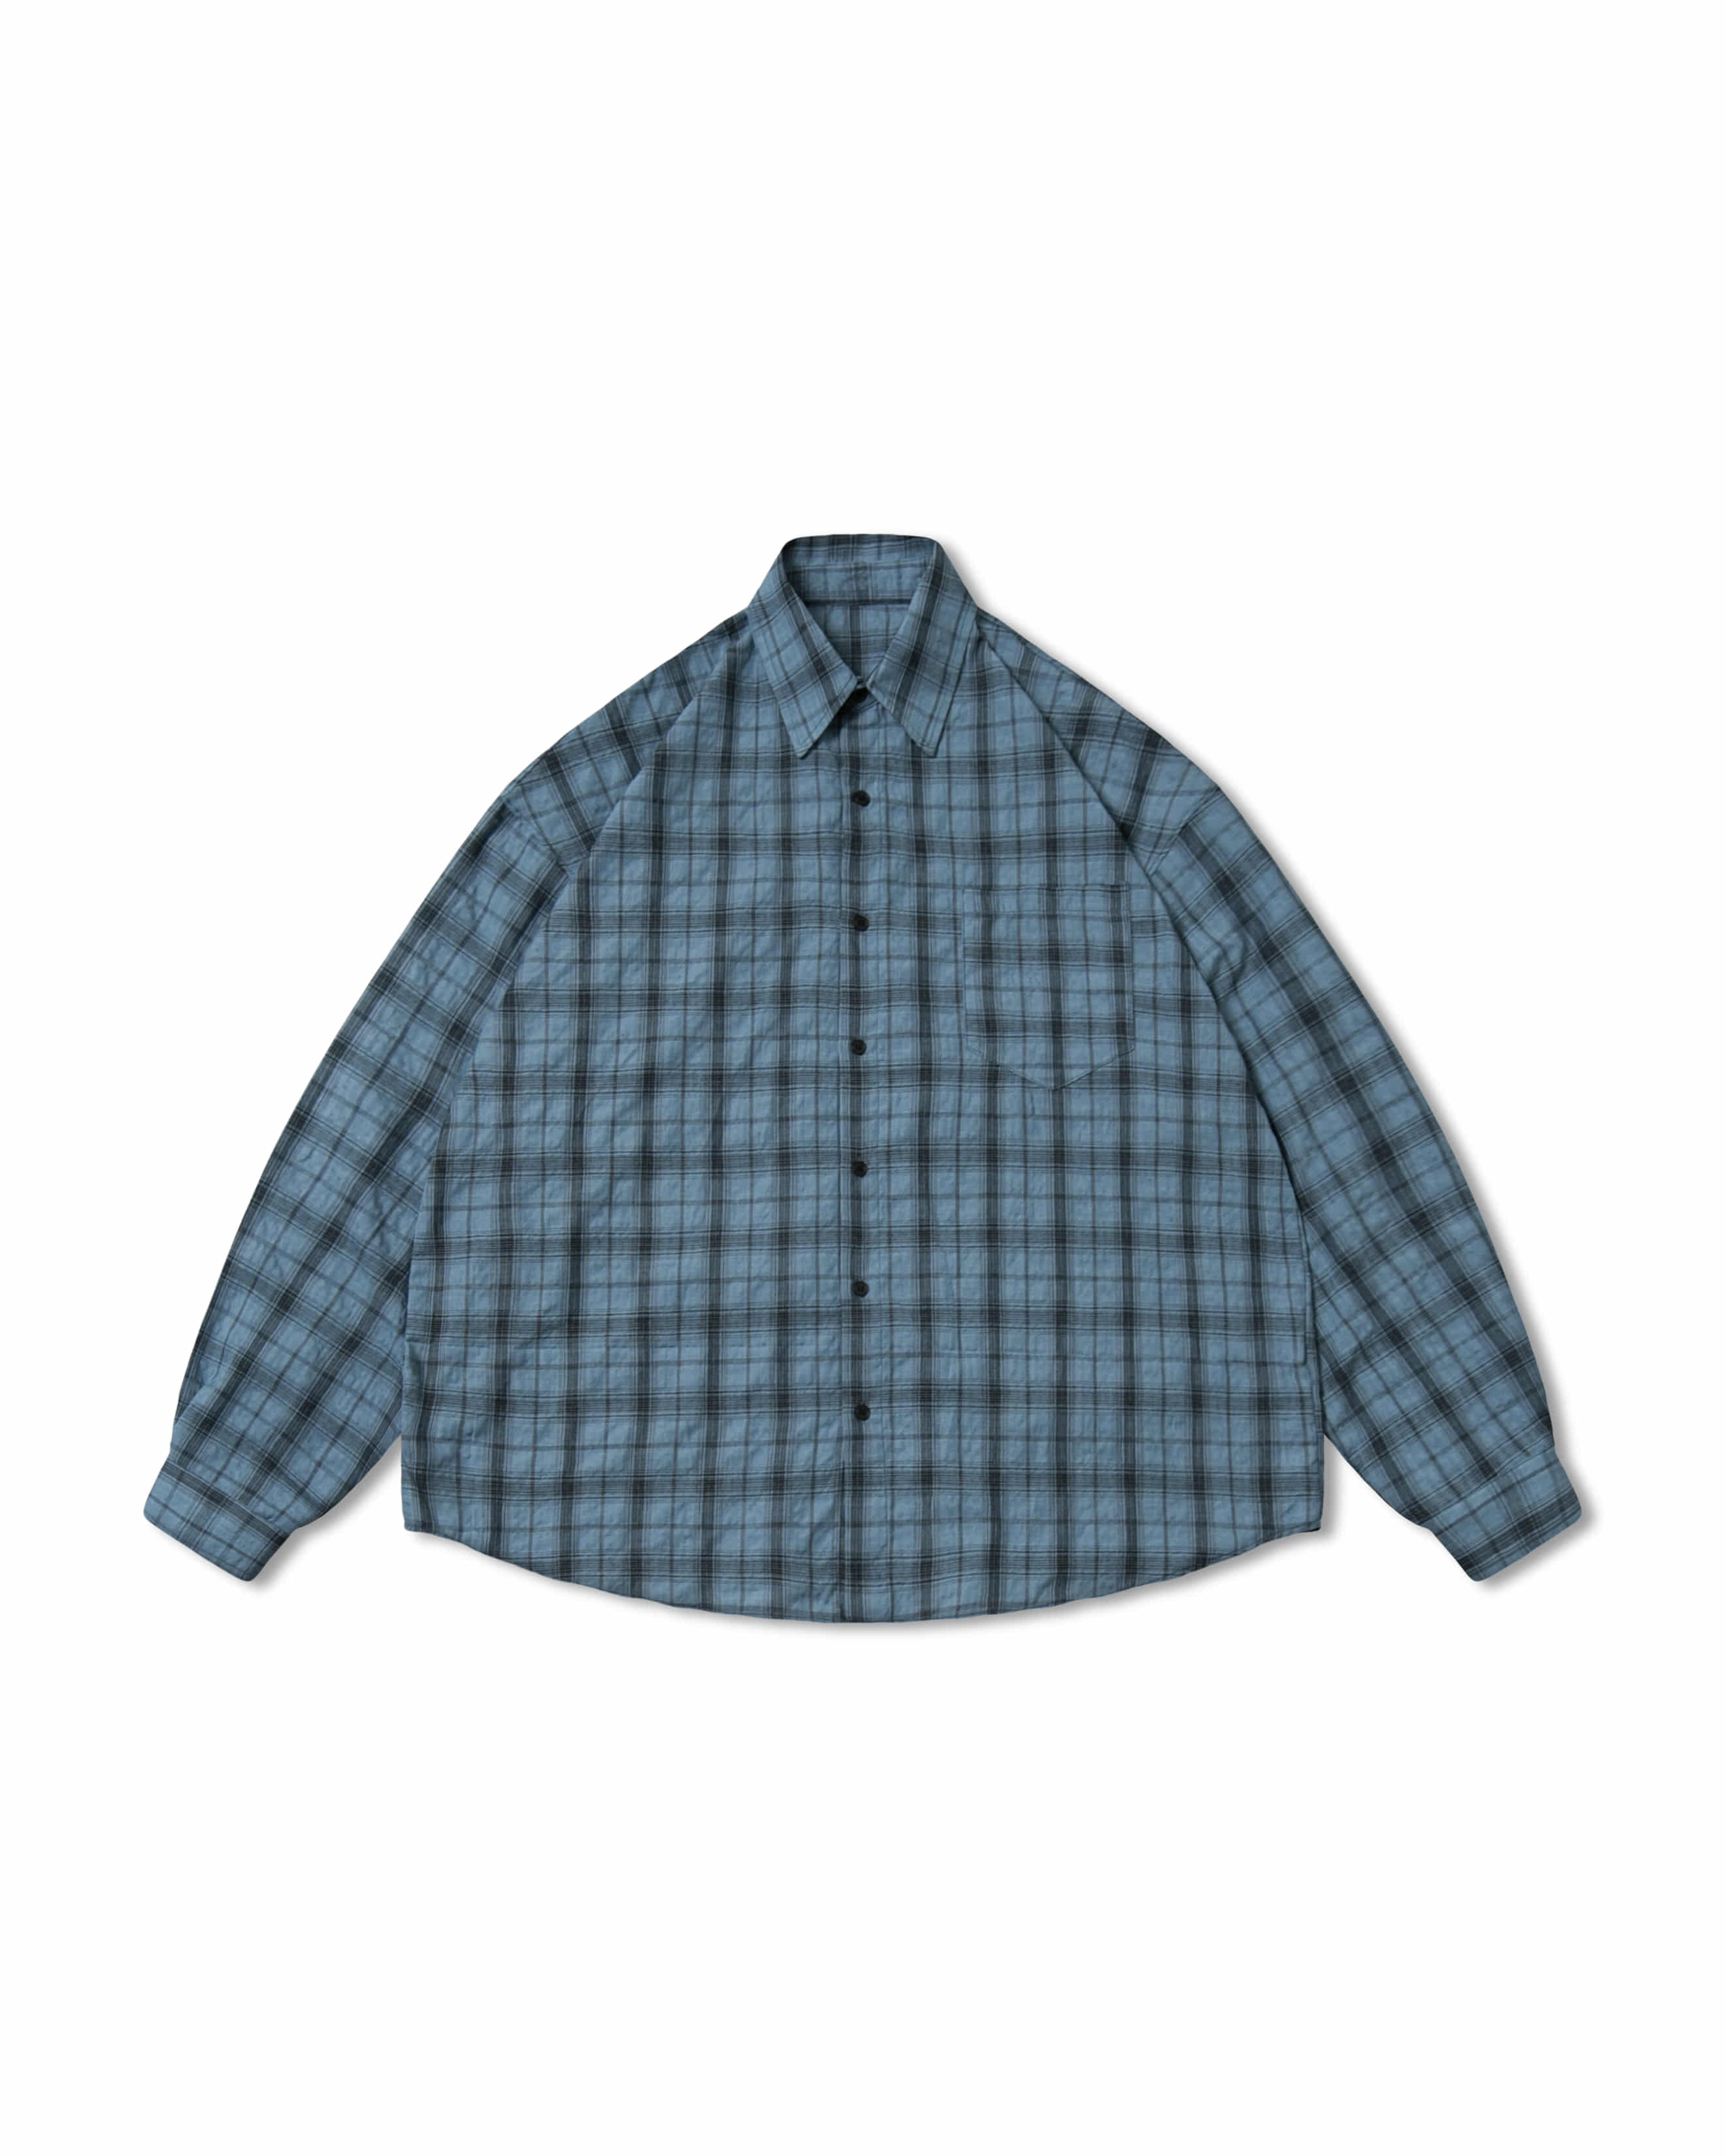 Seersucker Crinkle Check Shirt - Blue